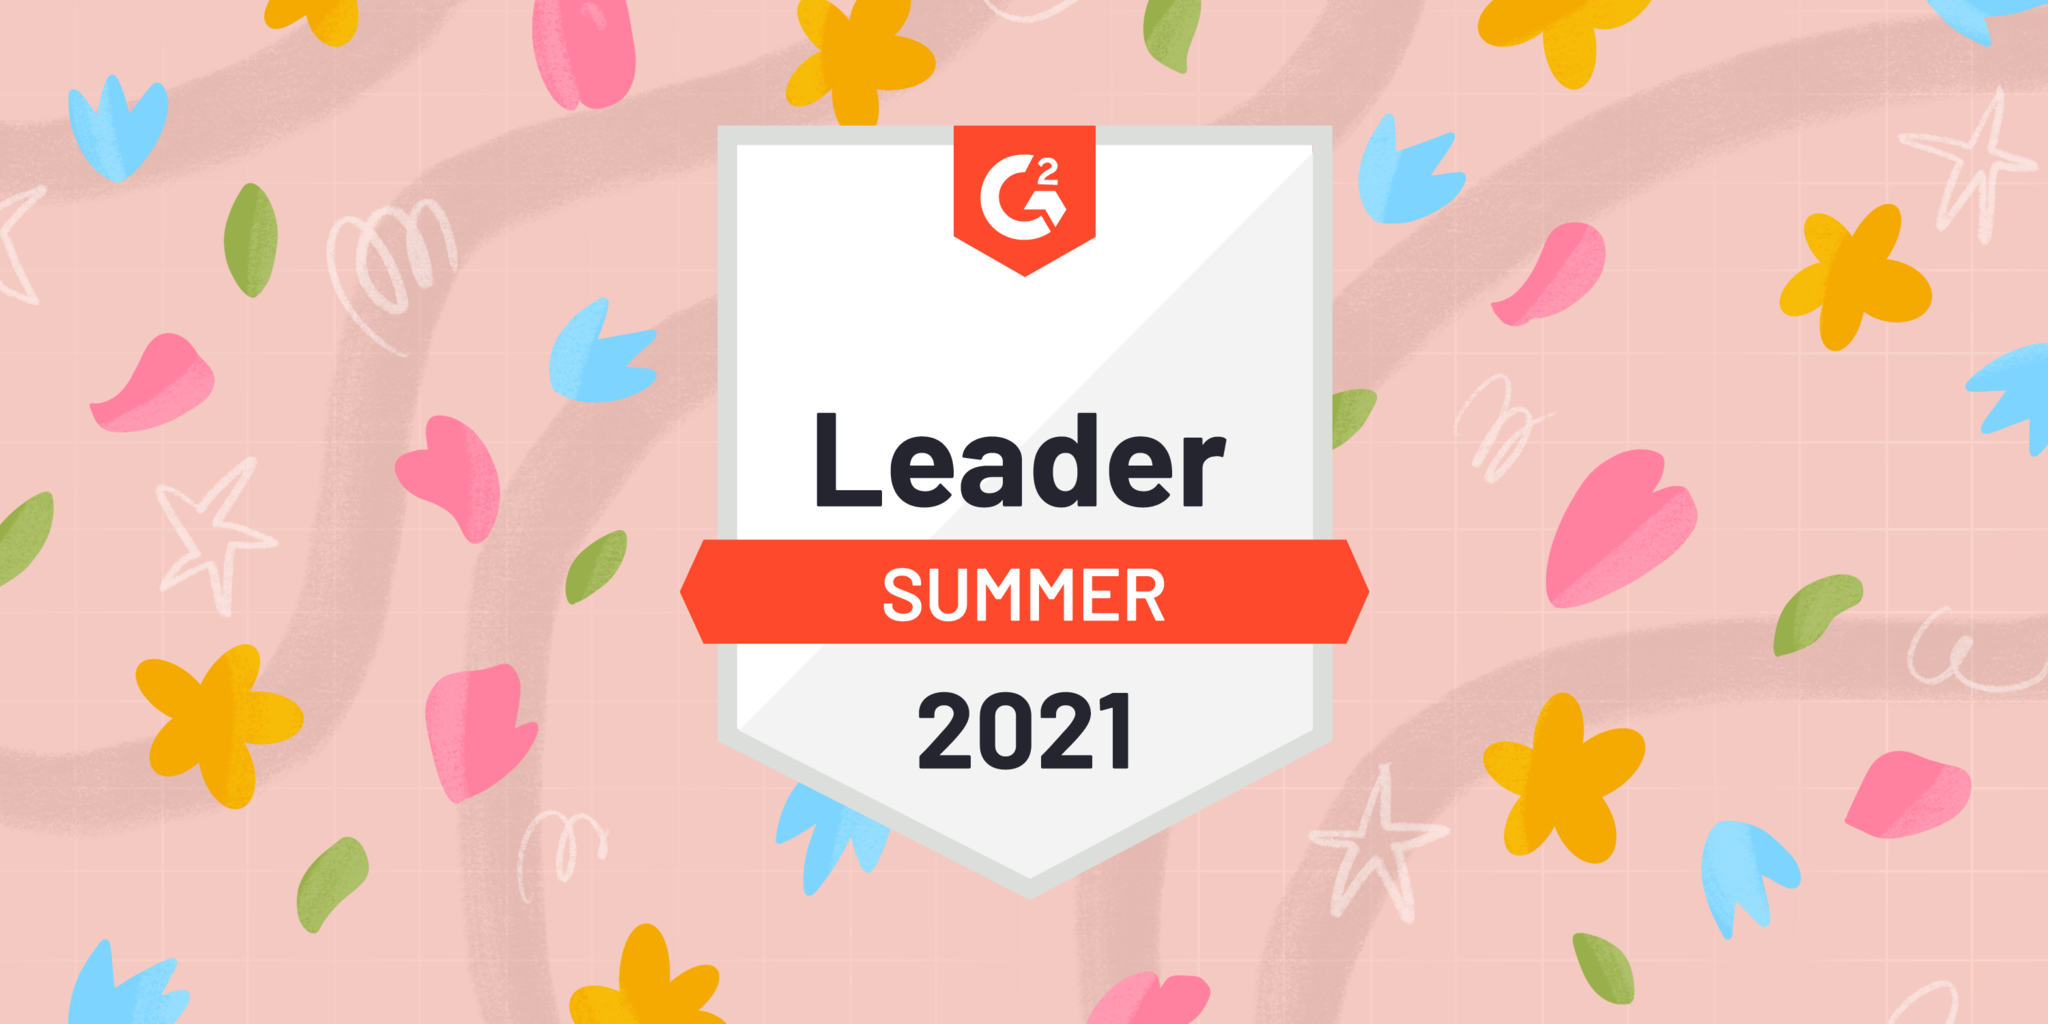 Snov.io Joins G2 Summer 2021 Leaders